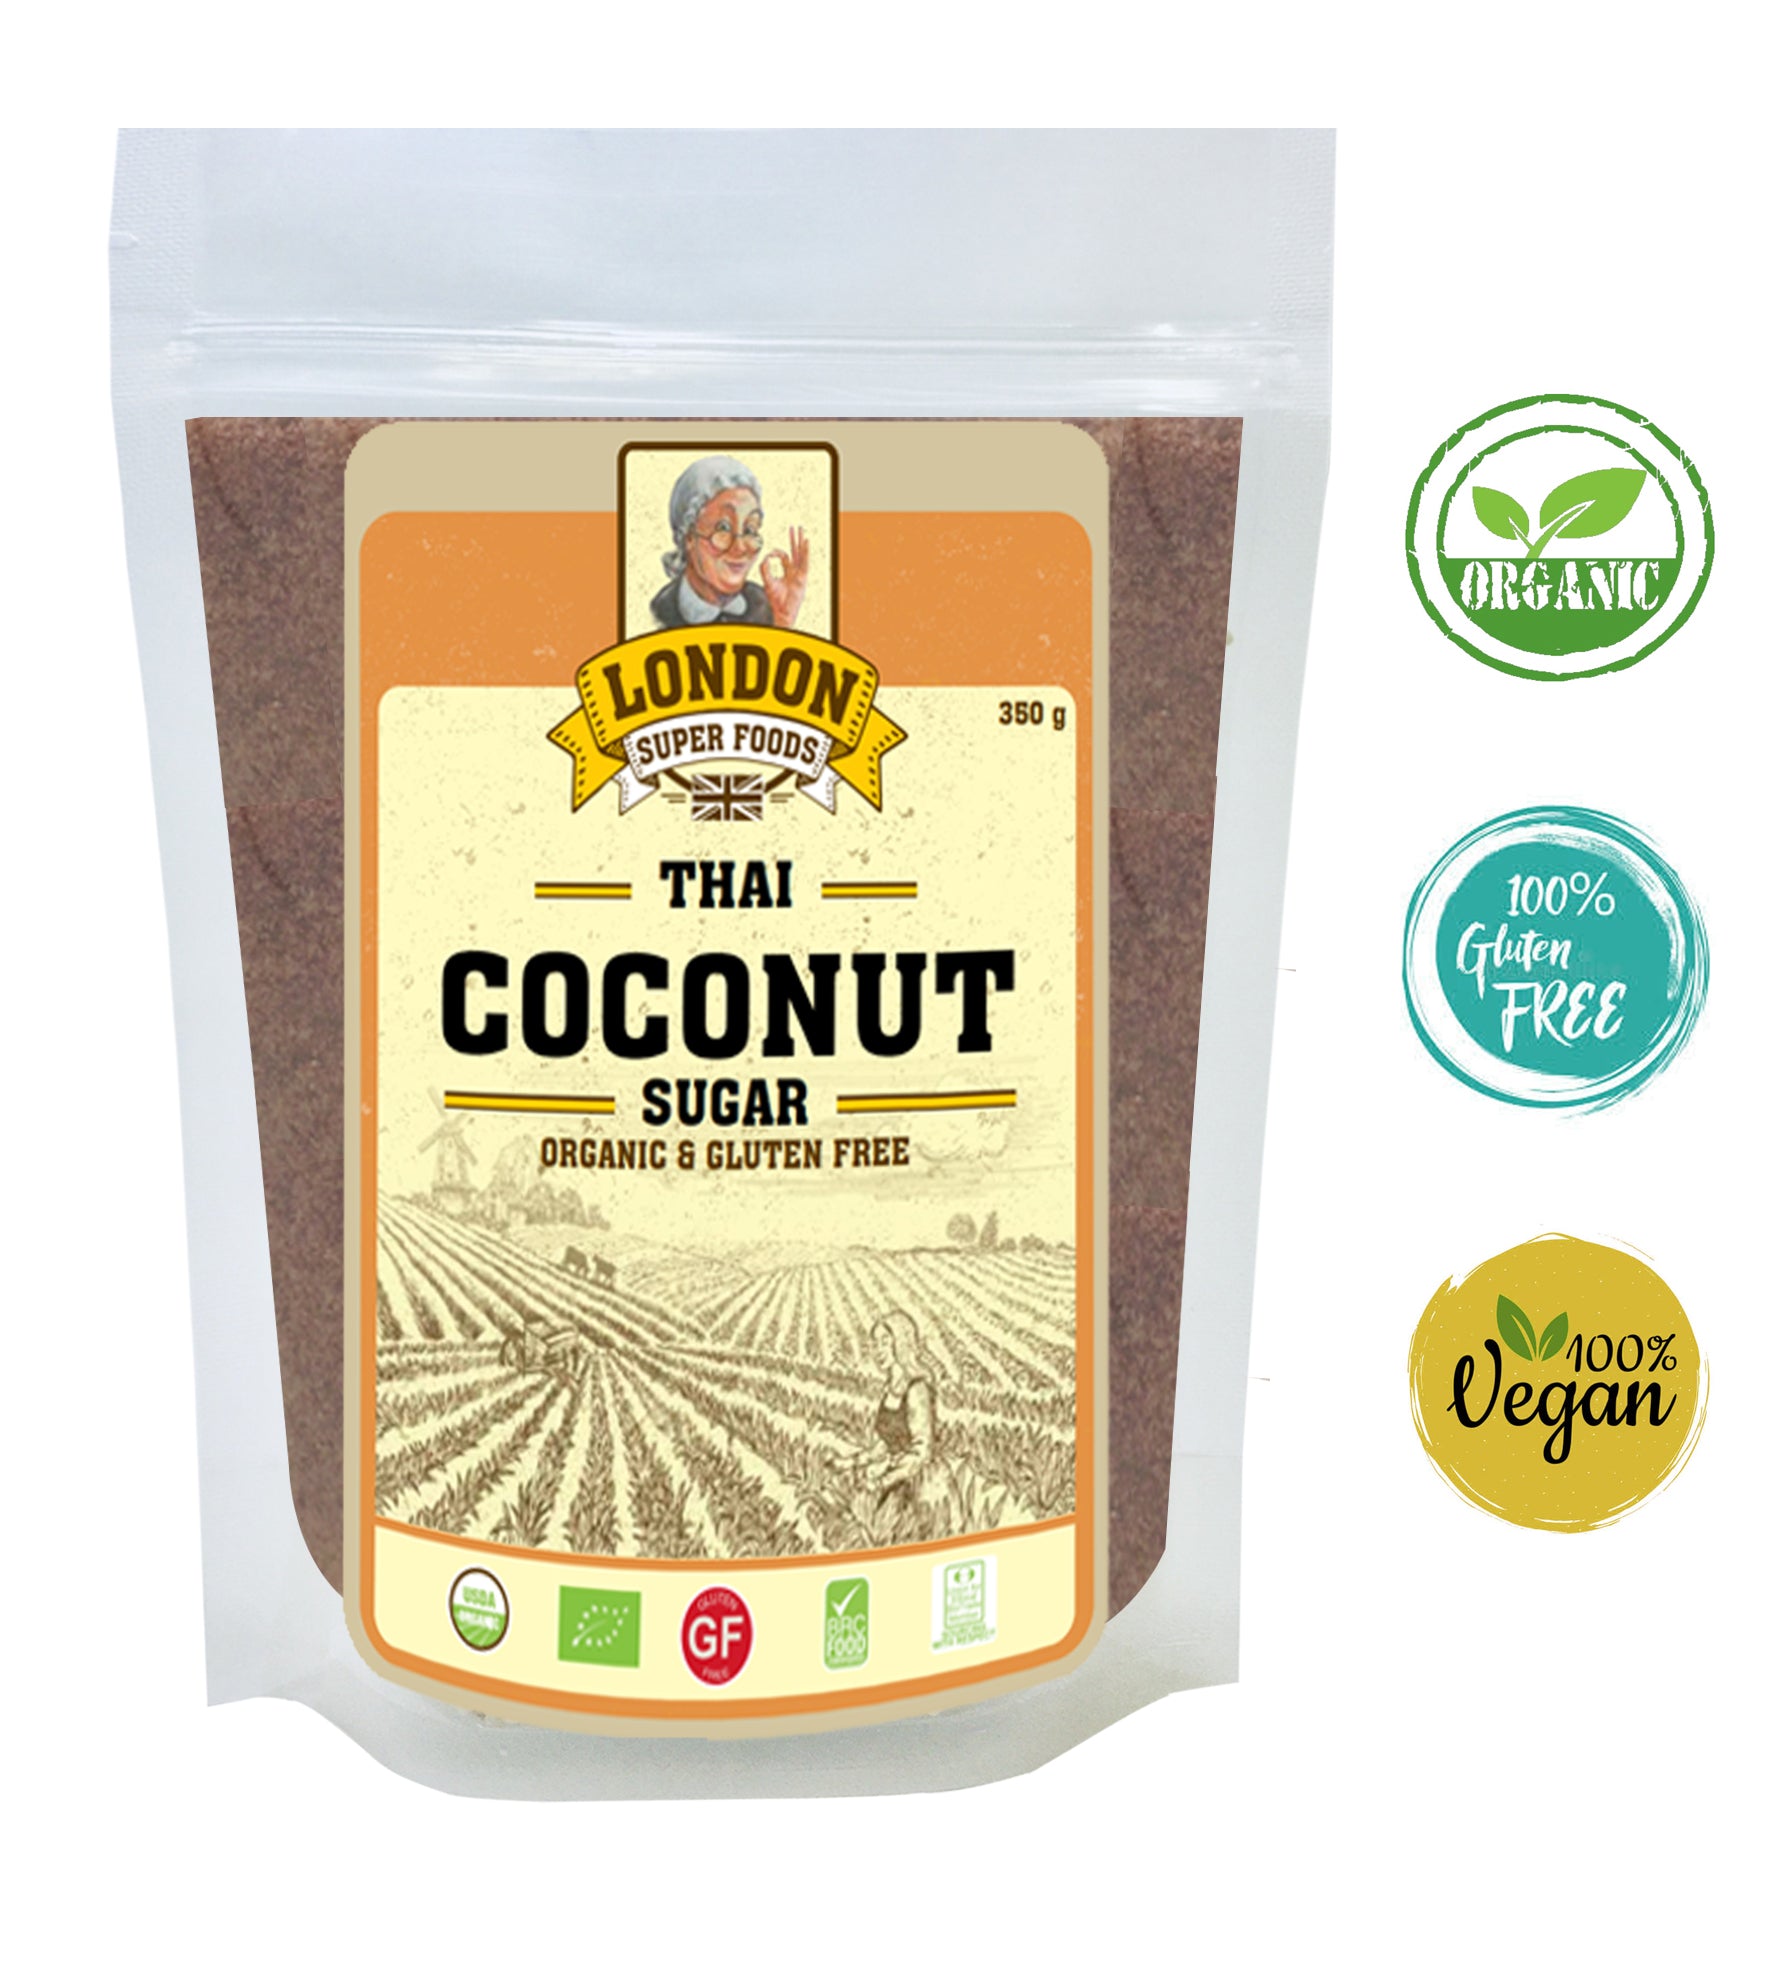 LONDON SUPER FOODS Thai Organic Coconut Sugar, 350g - Gluten Free